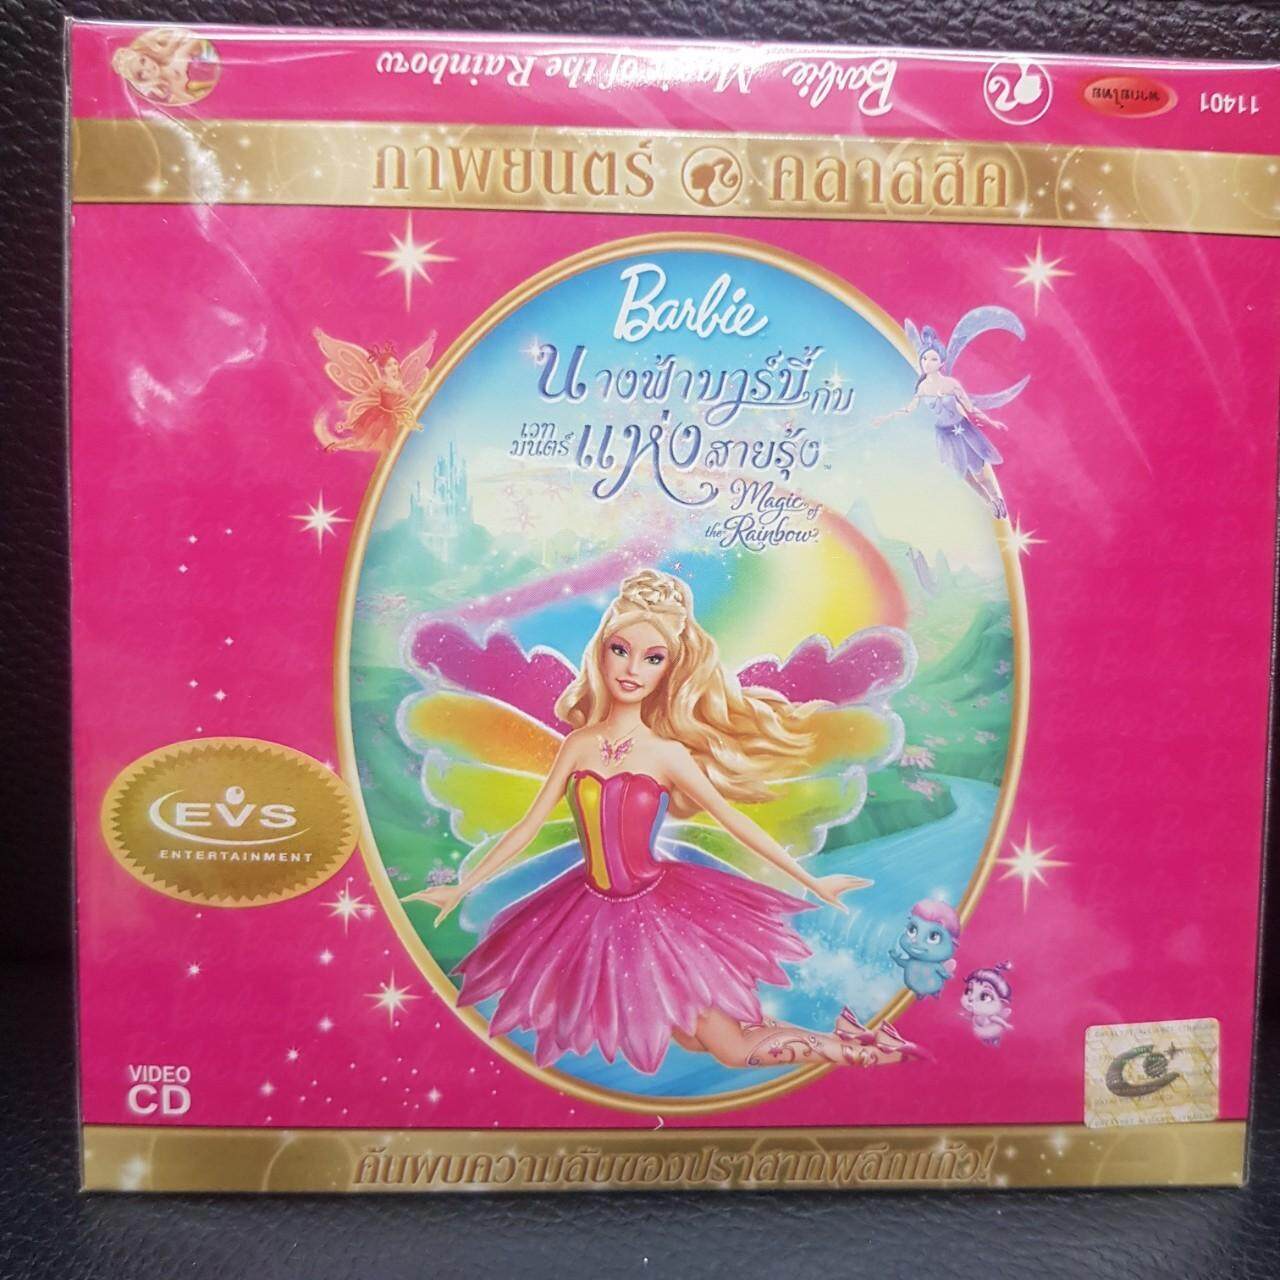 VCDหนัง นางฟ้าบาร์บี้กับเวทมนตร์ แห่งสายรุ้ง Barbie Magic of the Rainbow ฉบับ พากย์ไทย (MVDVCD185-นางฟ้าบาร์บี้กับเวทมนตร์แห่งสายรุ้ง) cartoon การ์ตูน ดิสนีย์ disney MVD หนัง ภาพยนตร์ ดูหนัง ดีวีโอซีดี วีซีดี VCD มาสเตอร์แท้ STARMART